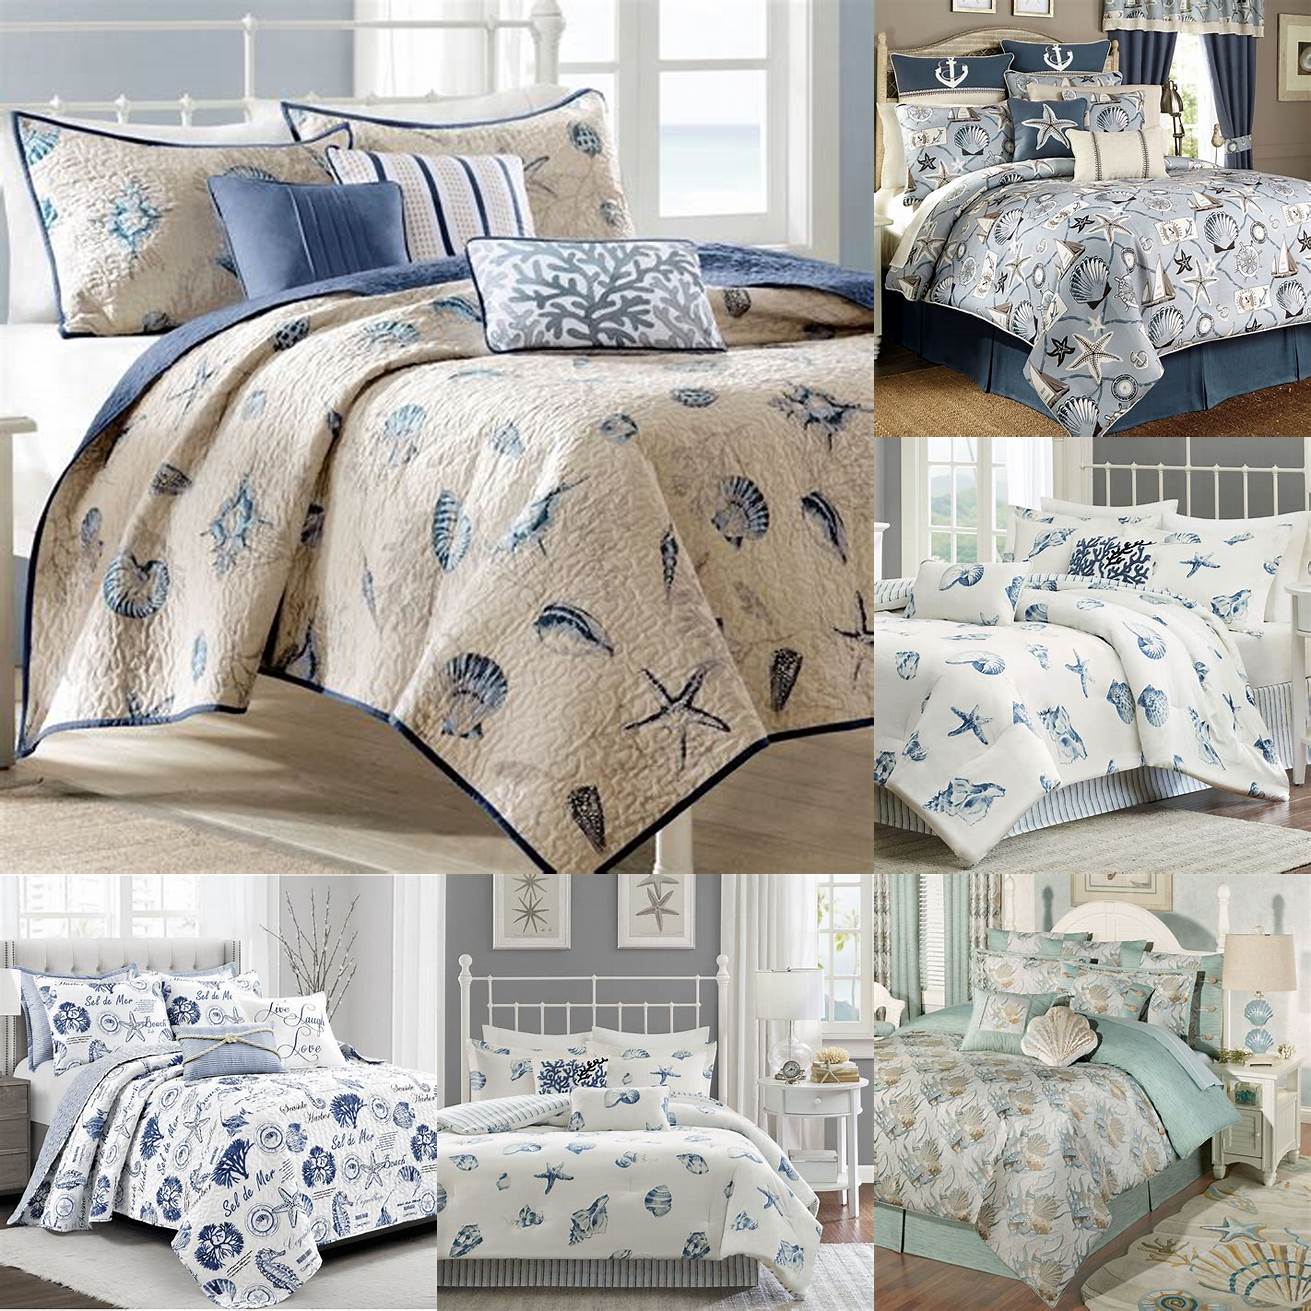 Comforter set with seashell motif